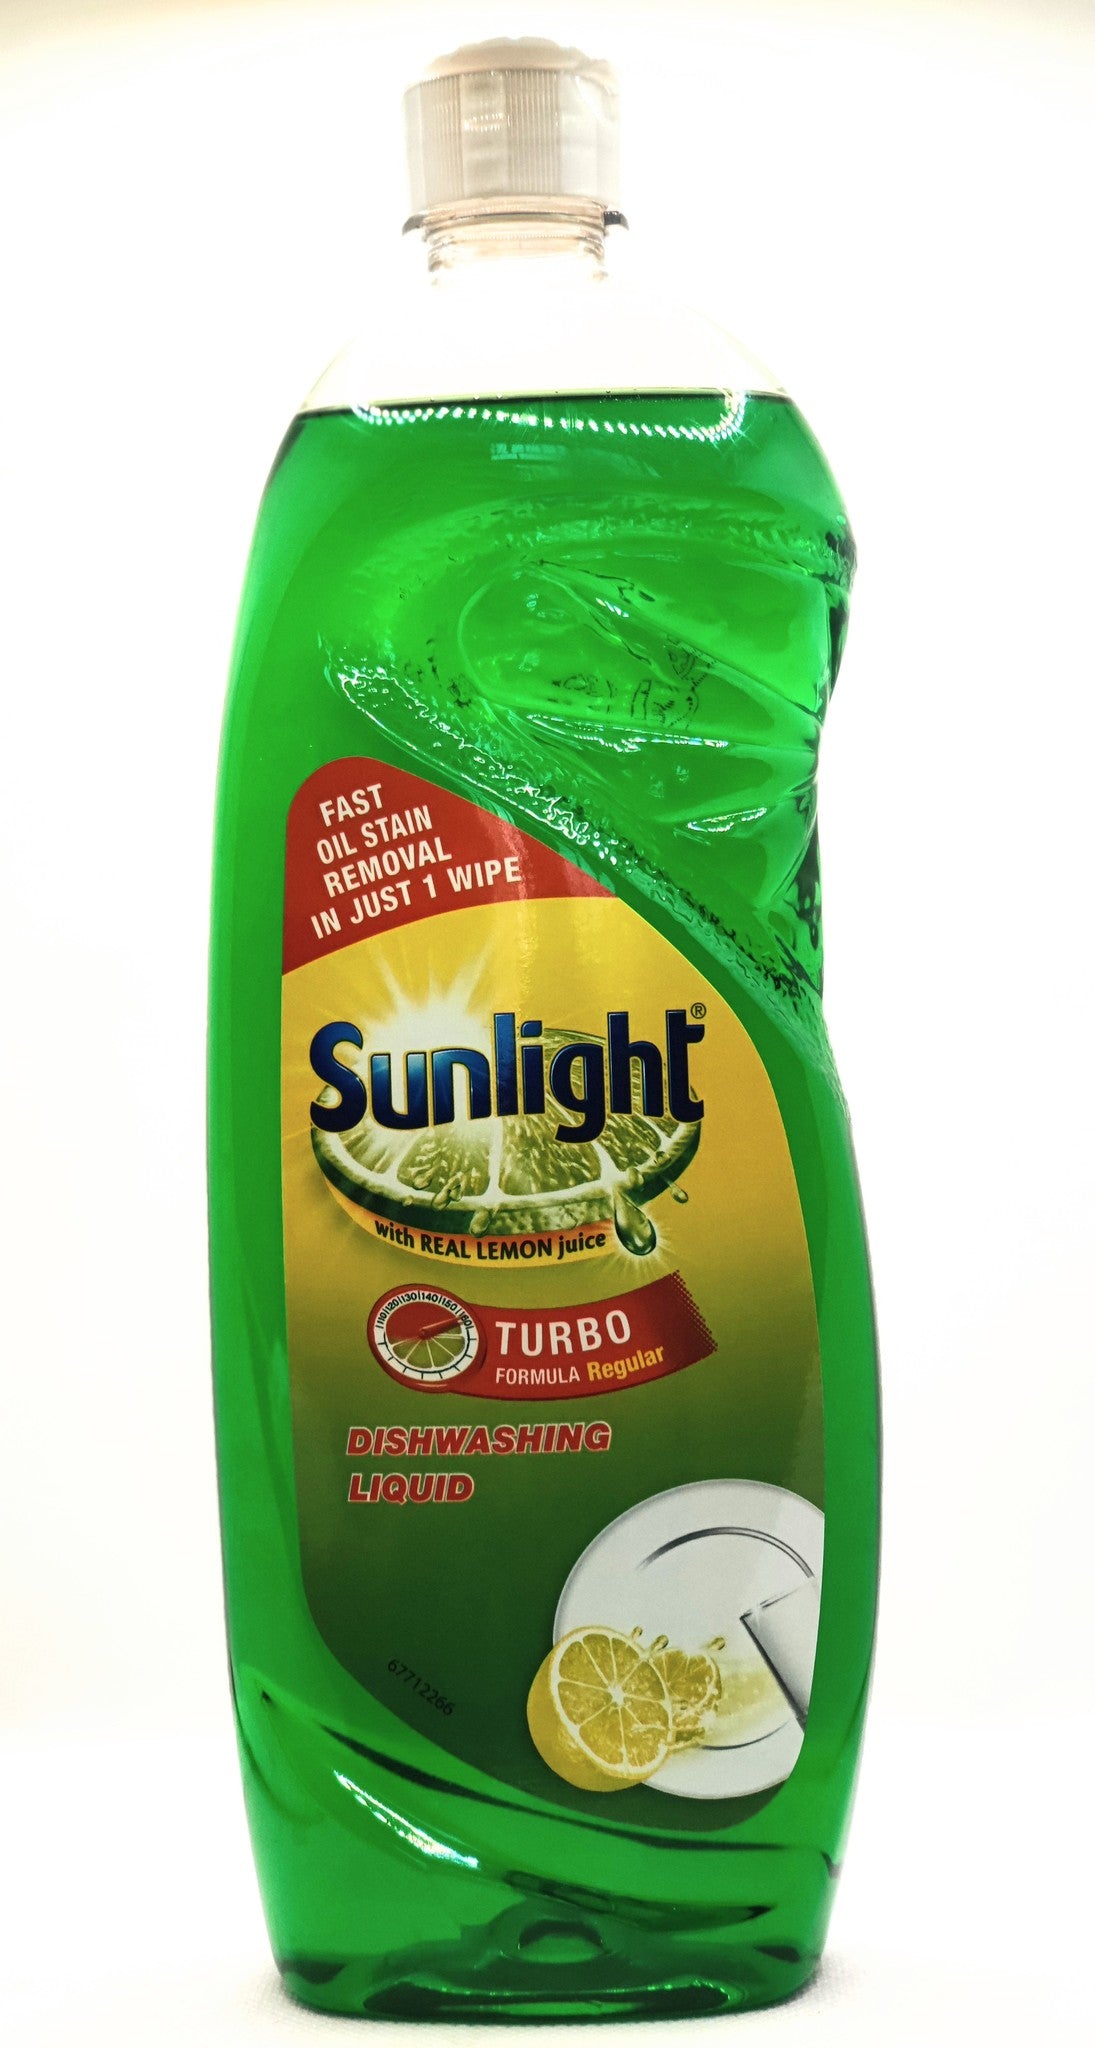 750 millilitre bottle of sunlight turbo formula regular dishwashing soap